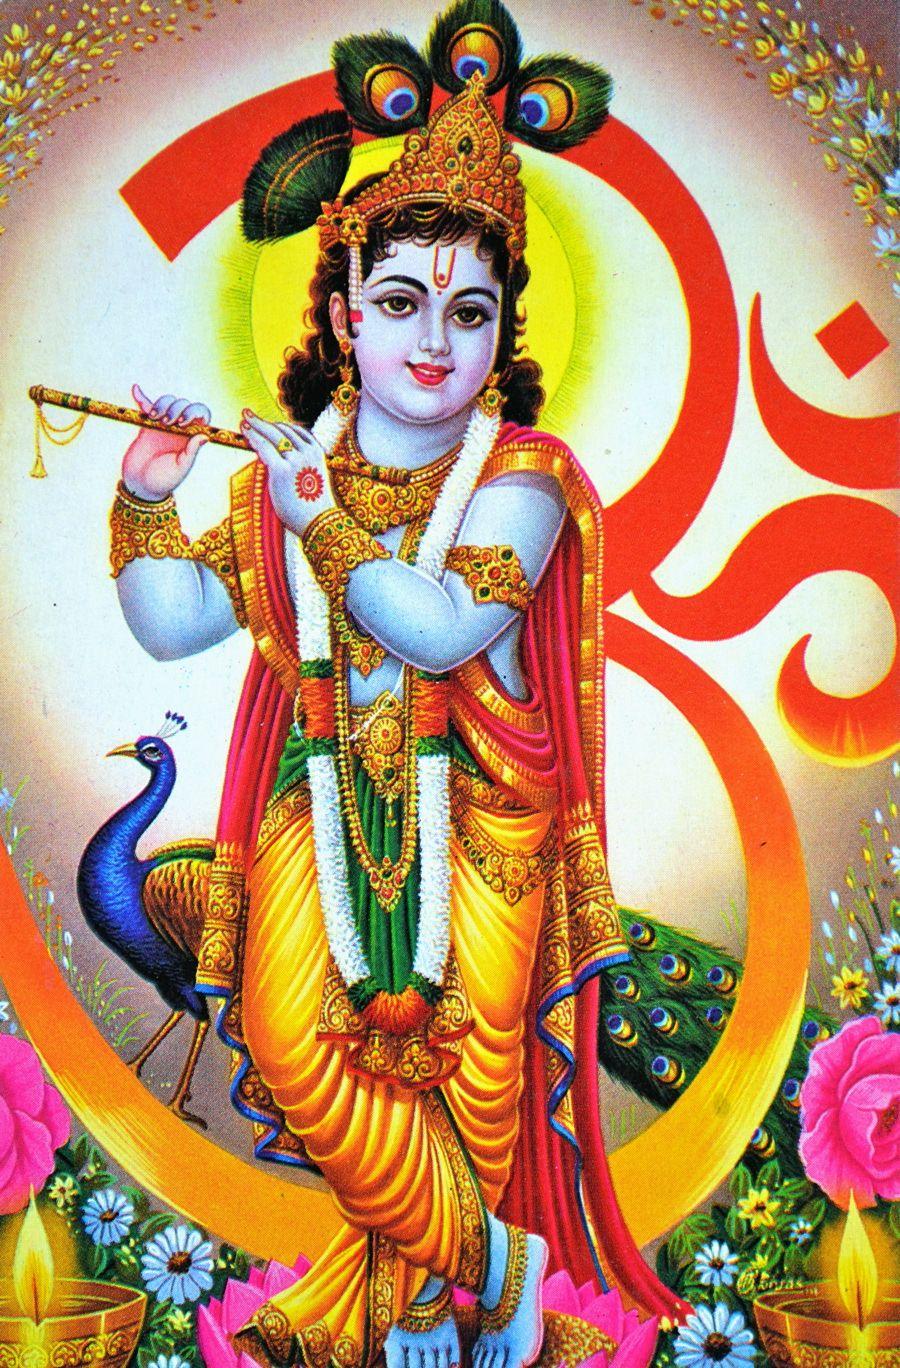 Photos: Hindu God Image, ART GALLERY